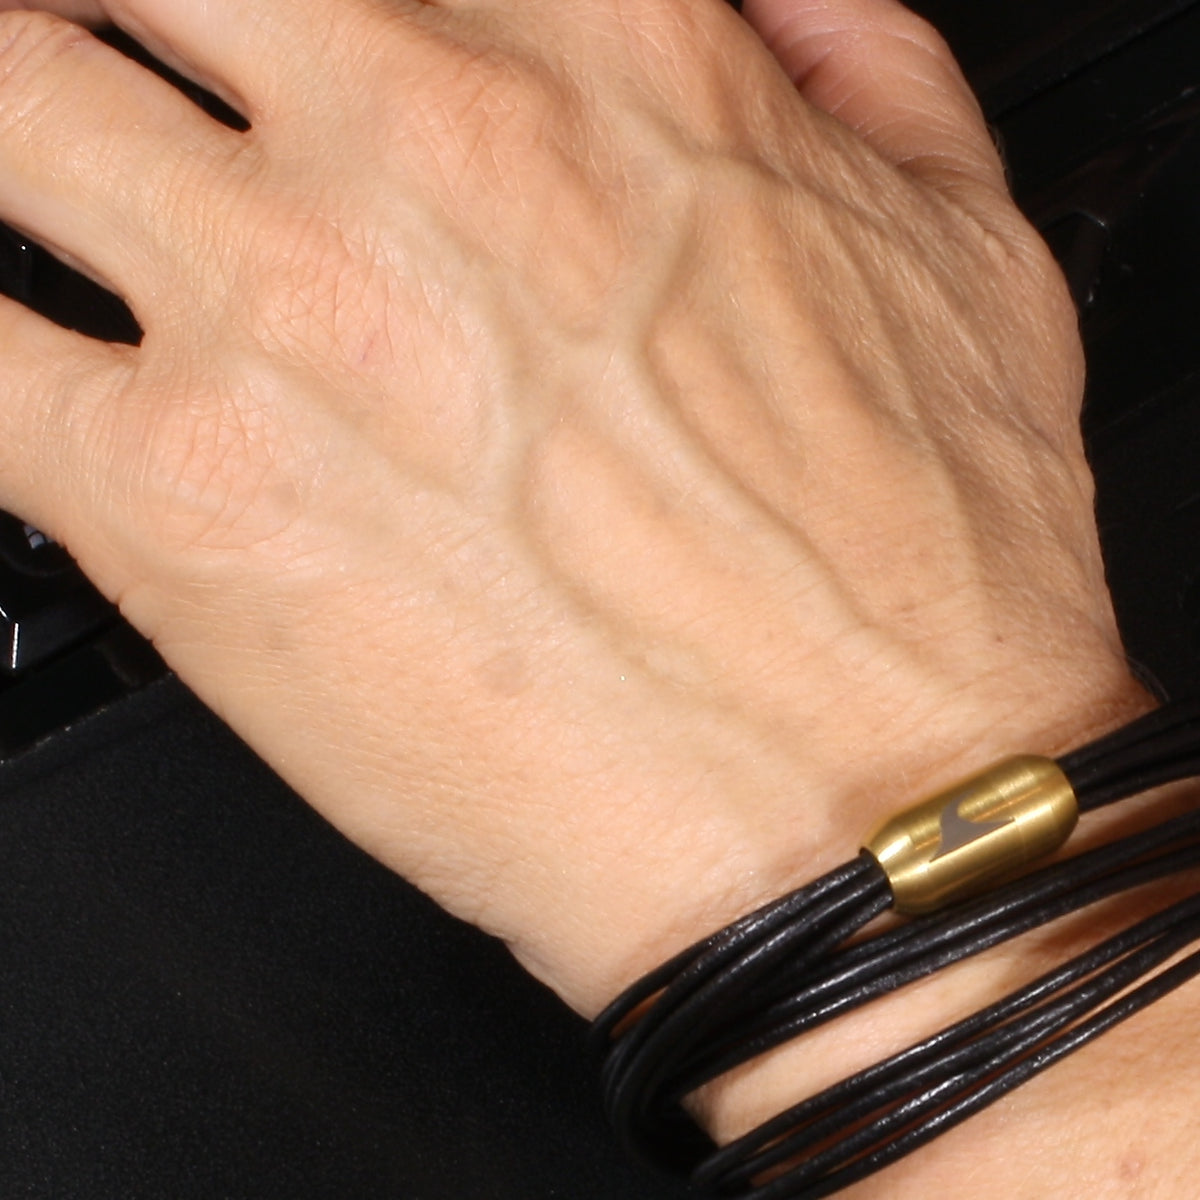 Damen-Leder-armband-fem2-schwarz-gold-Edelstahlverschluss-getragen-wavepirate-shop-r